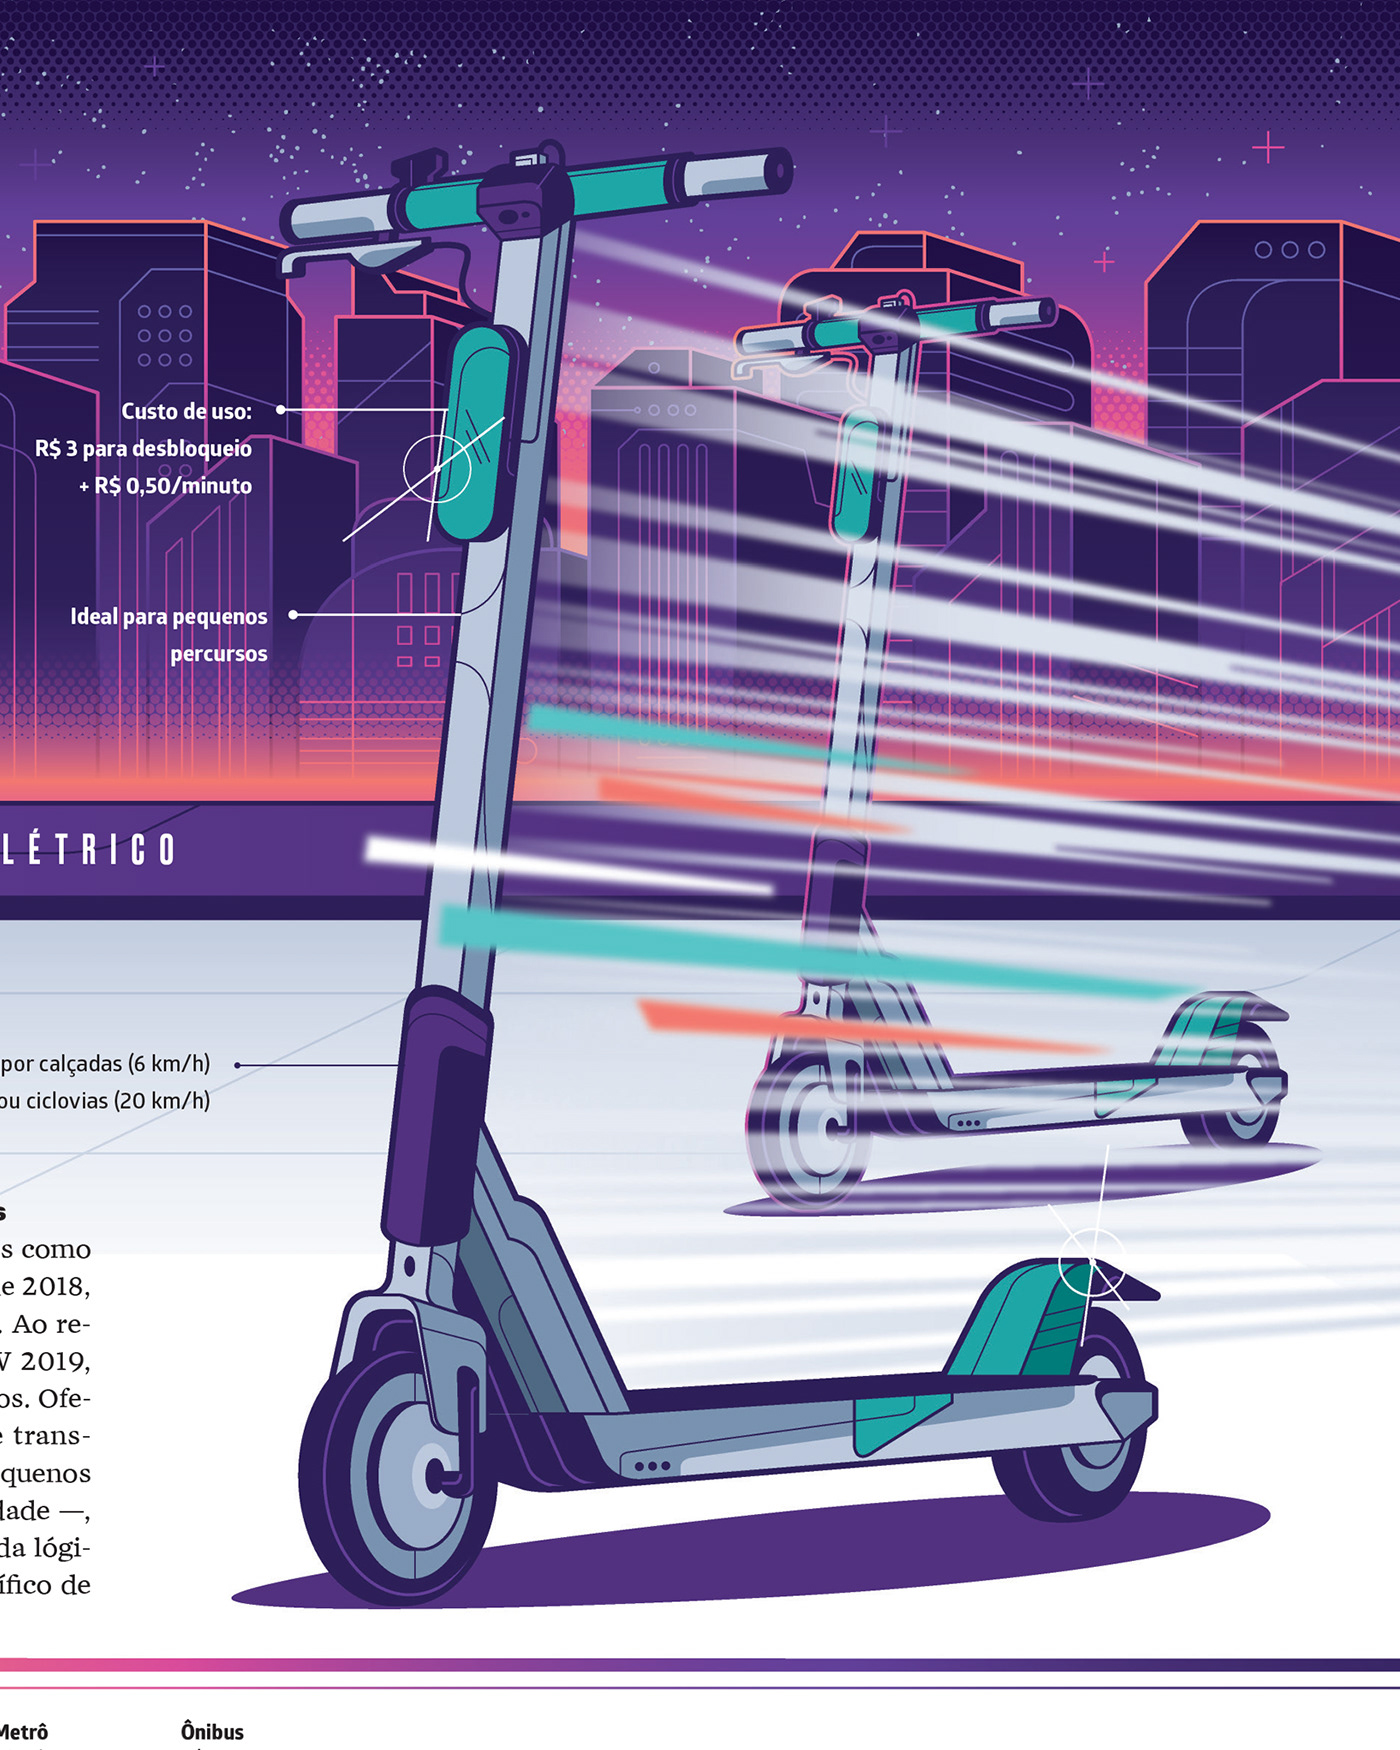 electric Scooter drone eVTOL hyperloop futuristic city future